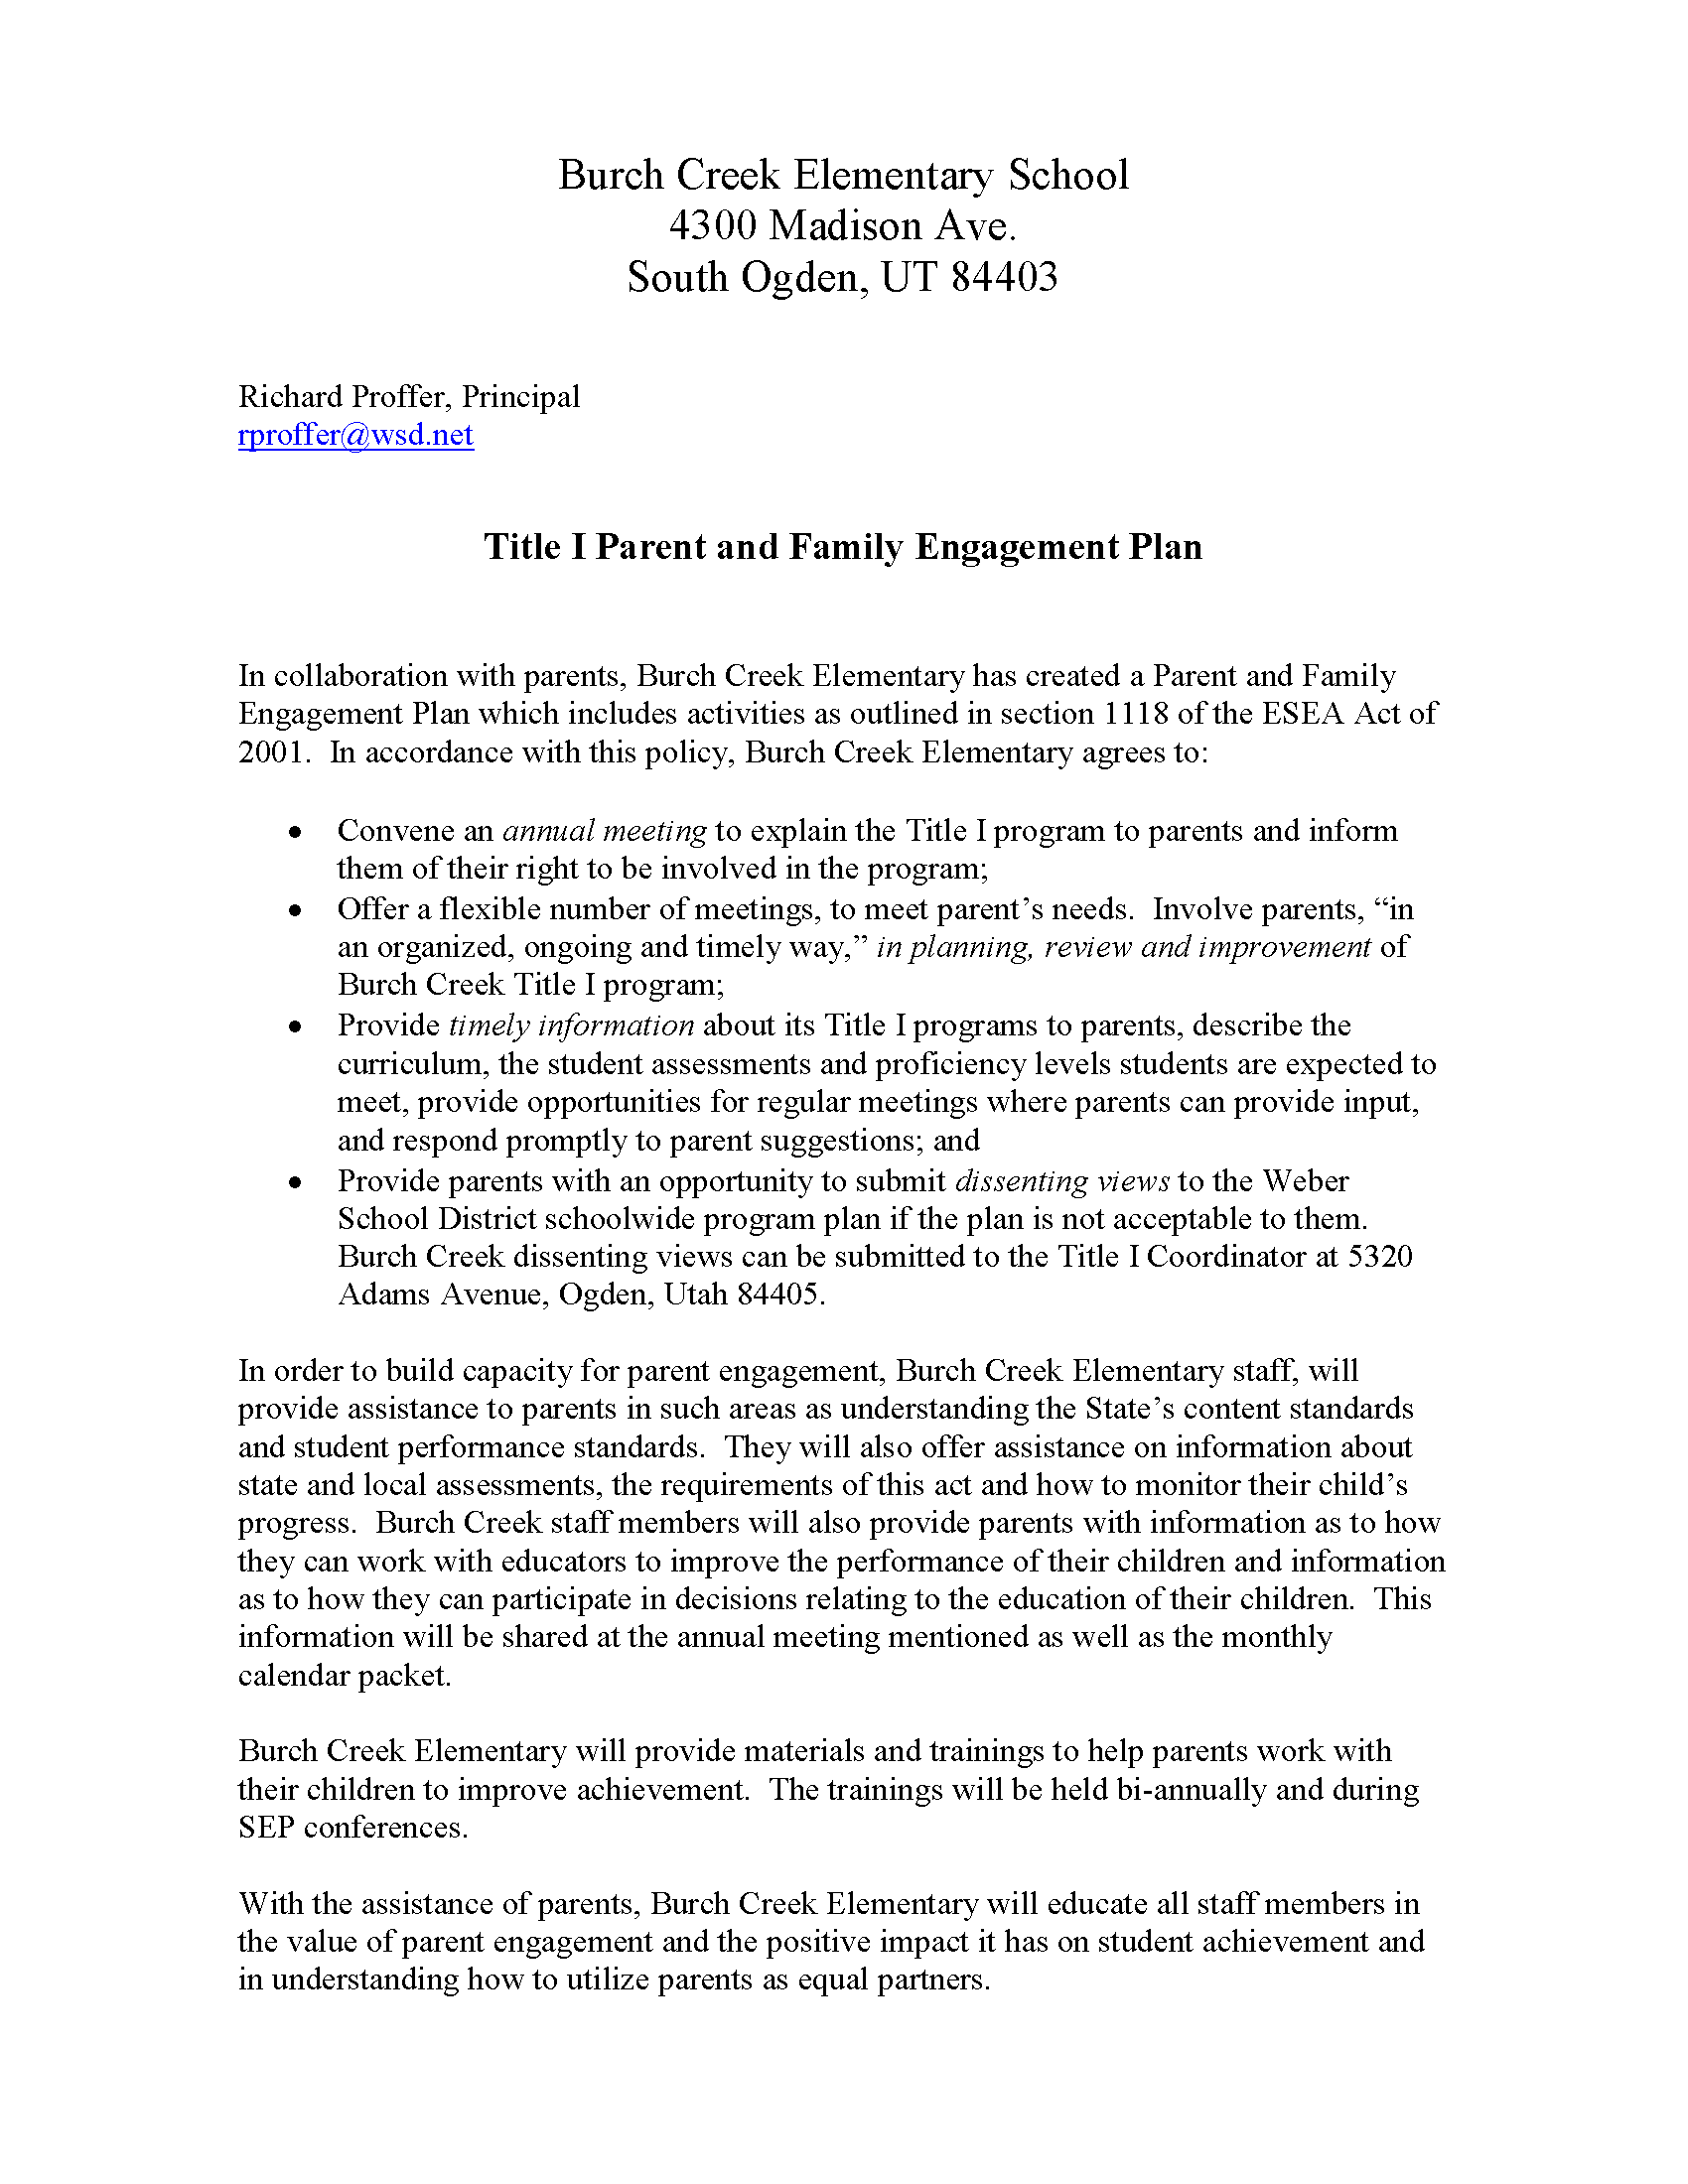 Burch Creek Parent Engagement English 2020 21 Page 1